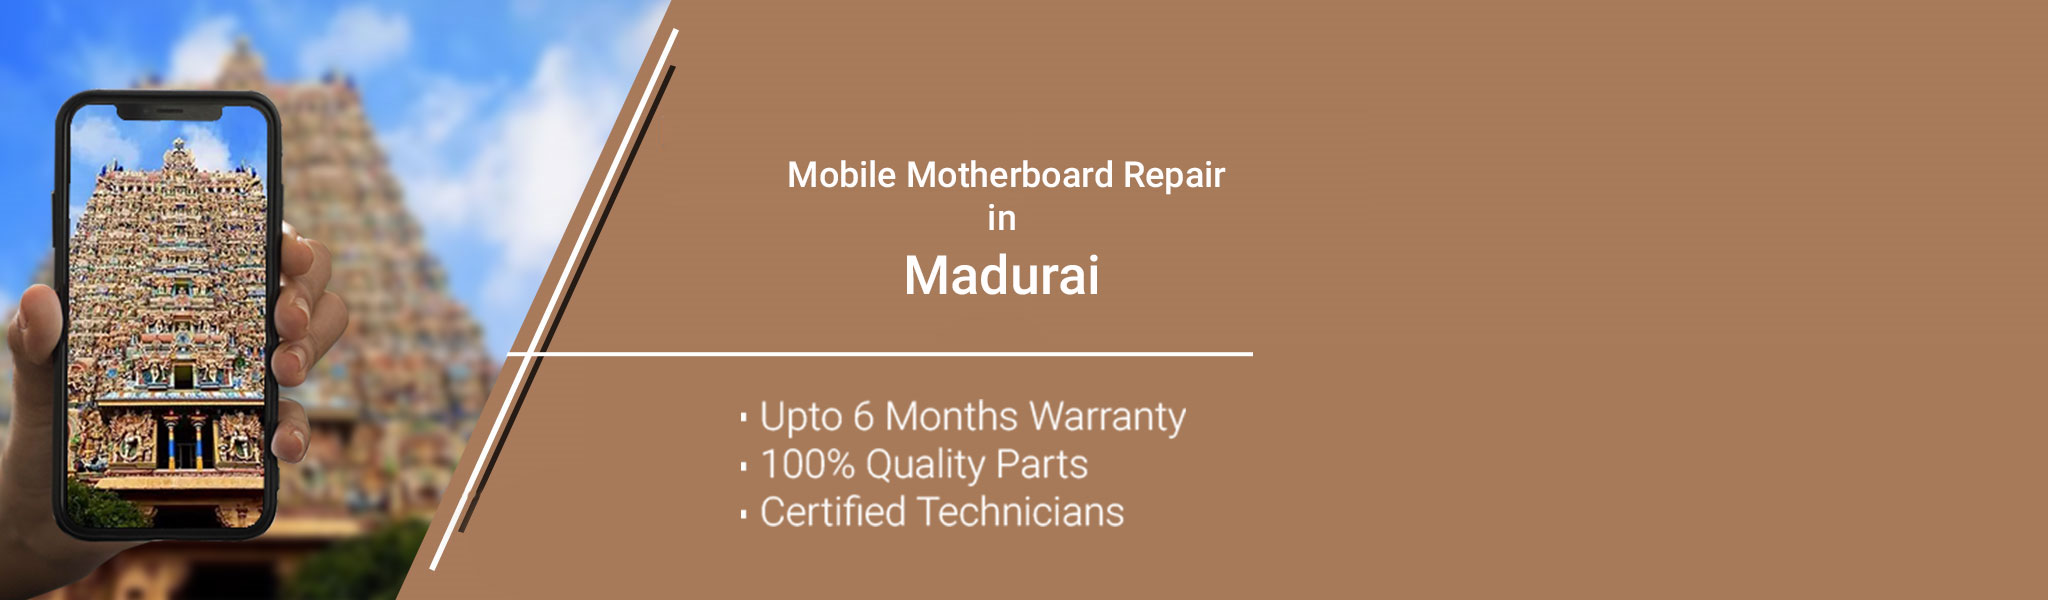 Madurai_Motherboard.jpg